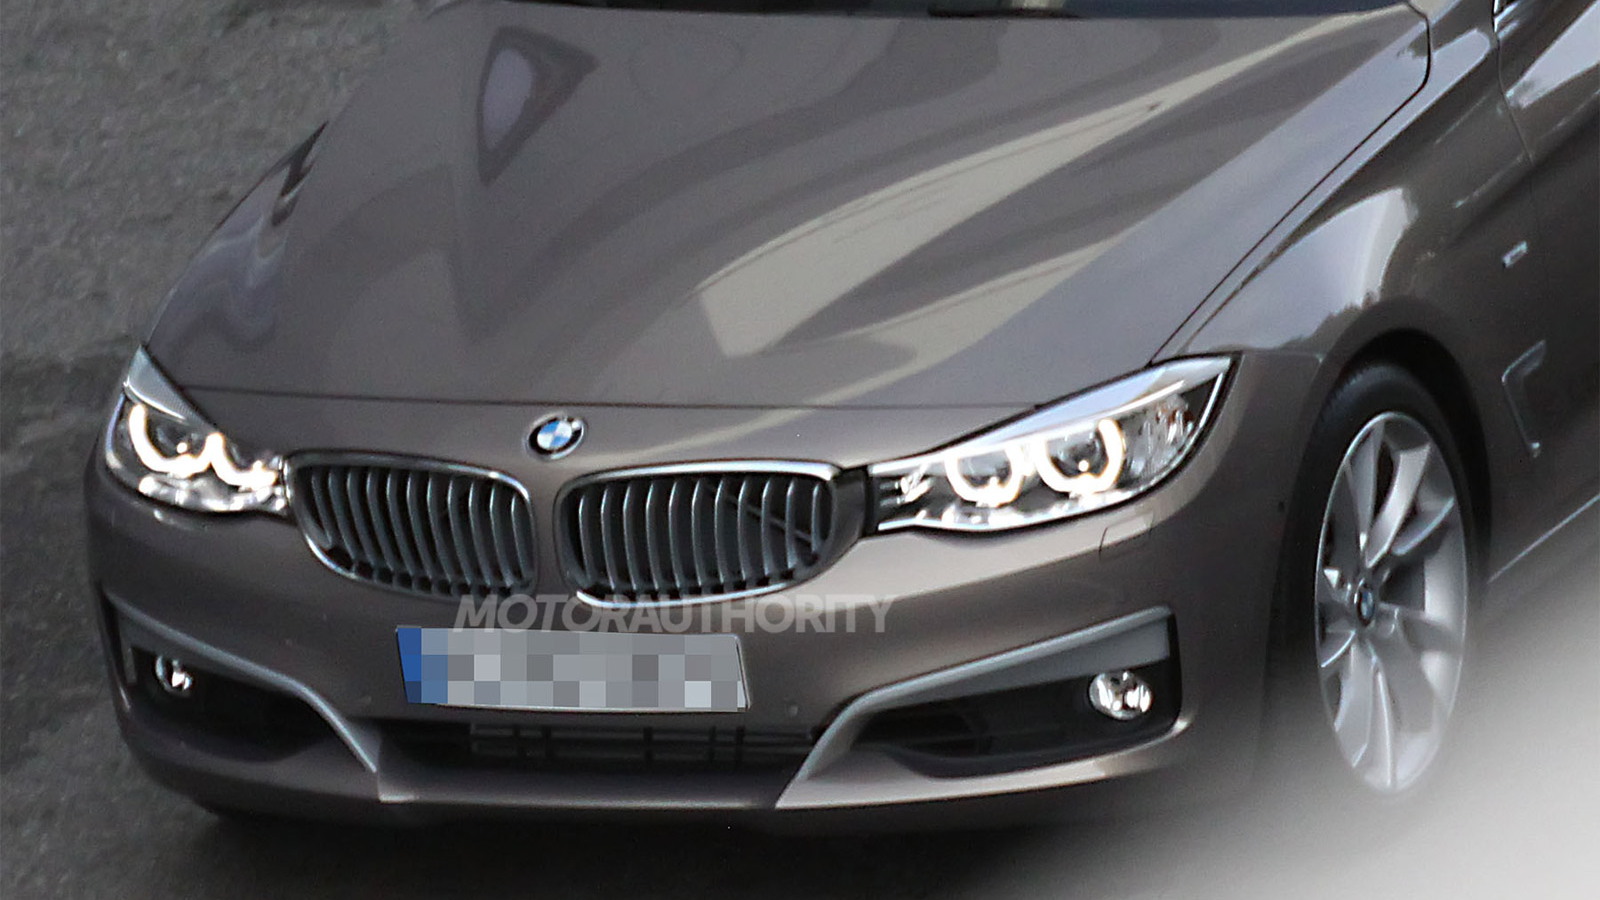 2013 BMW 3-Series Gran Turismo spy shots